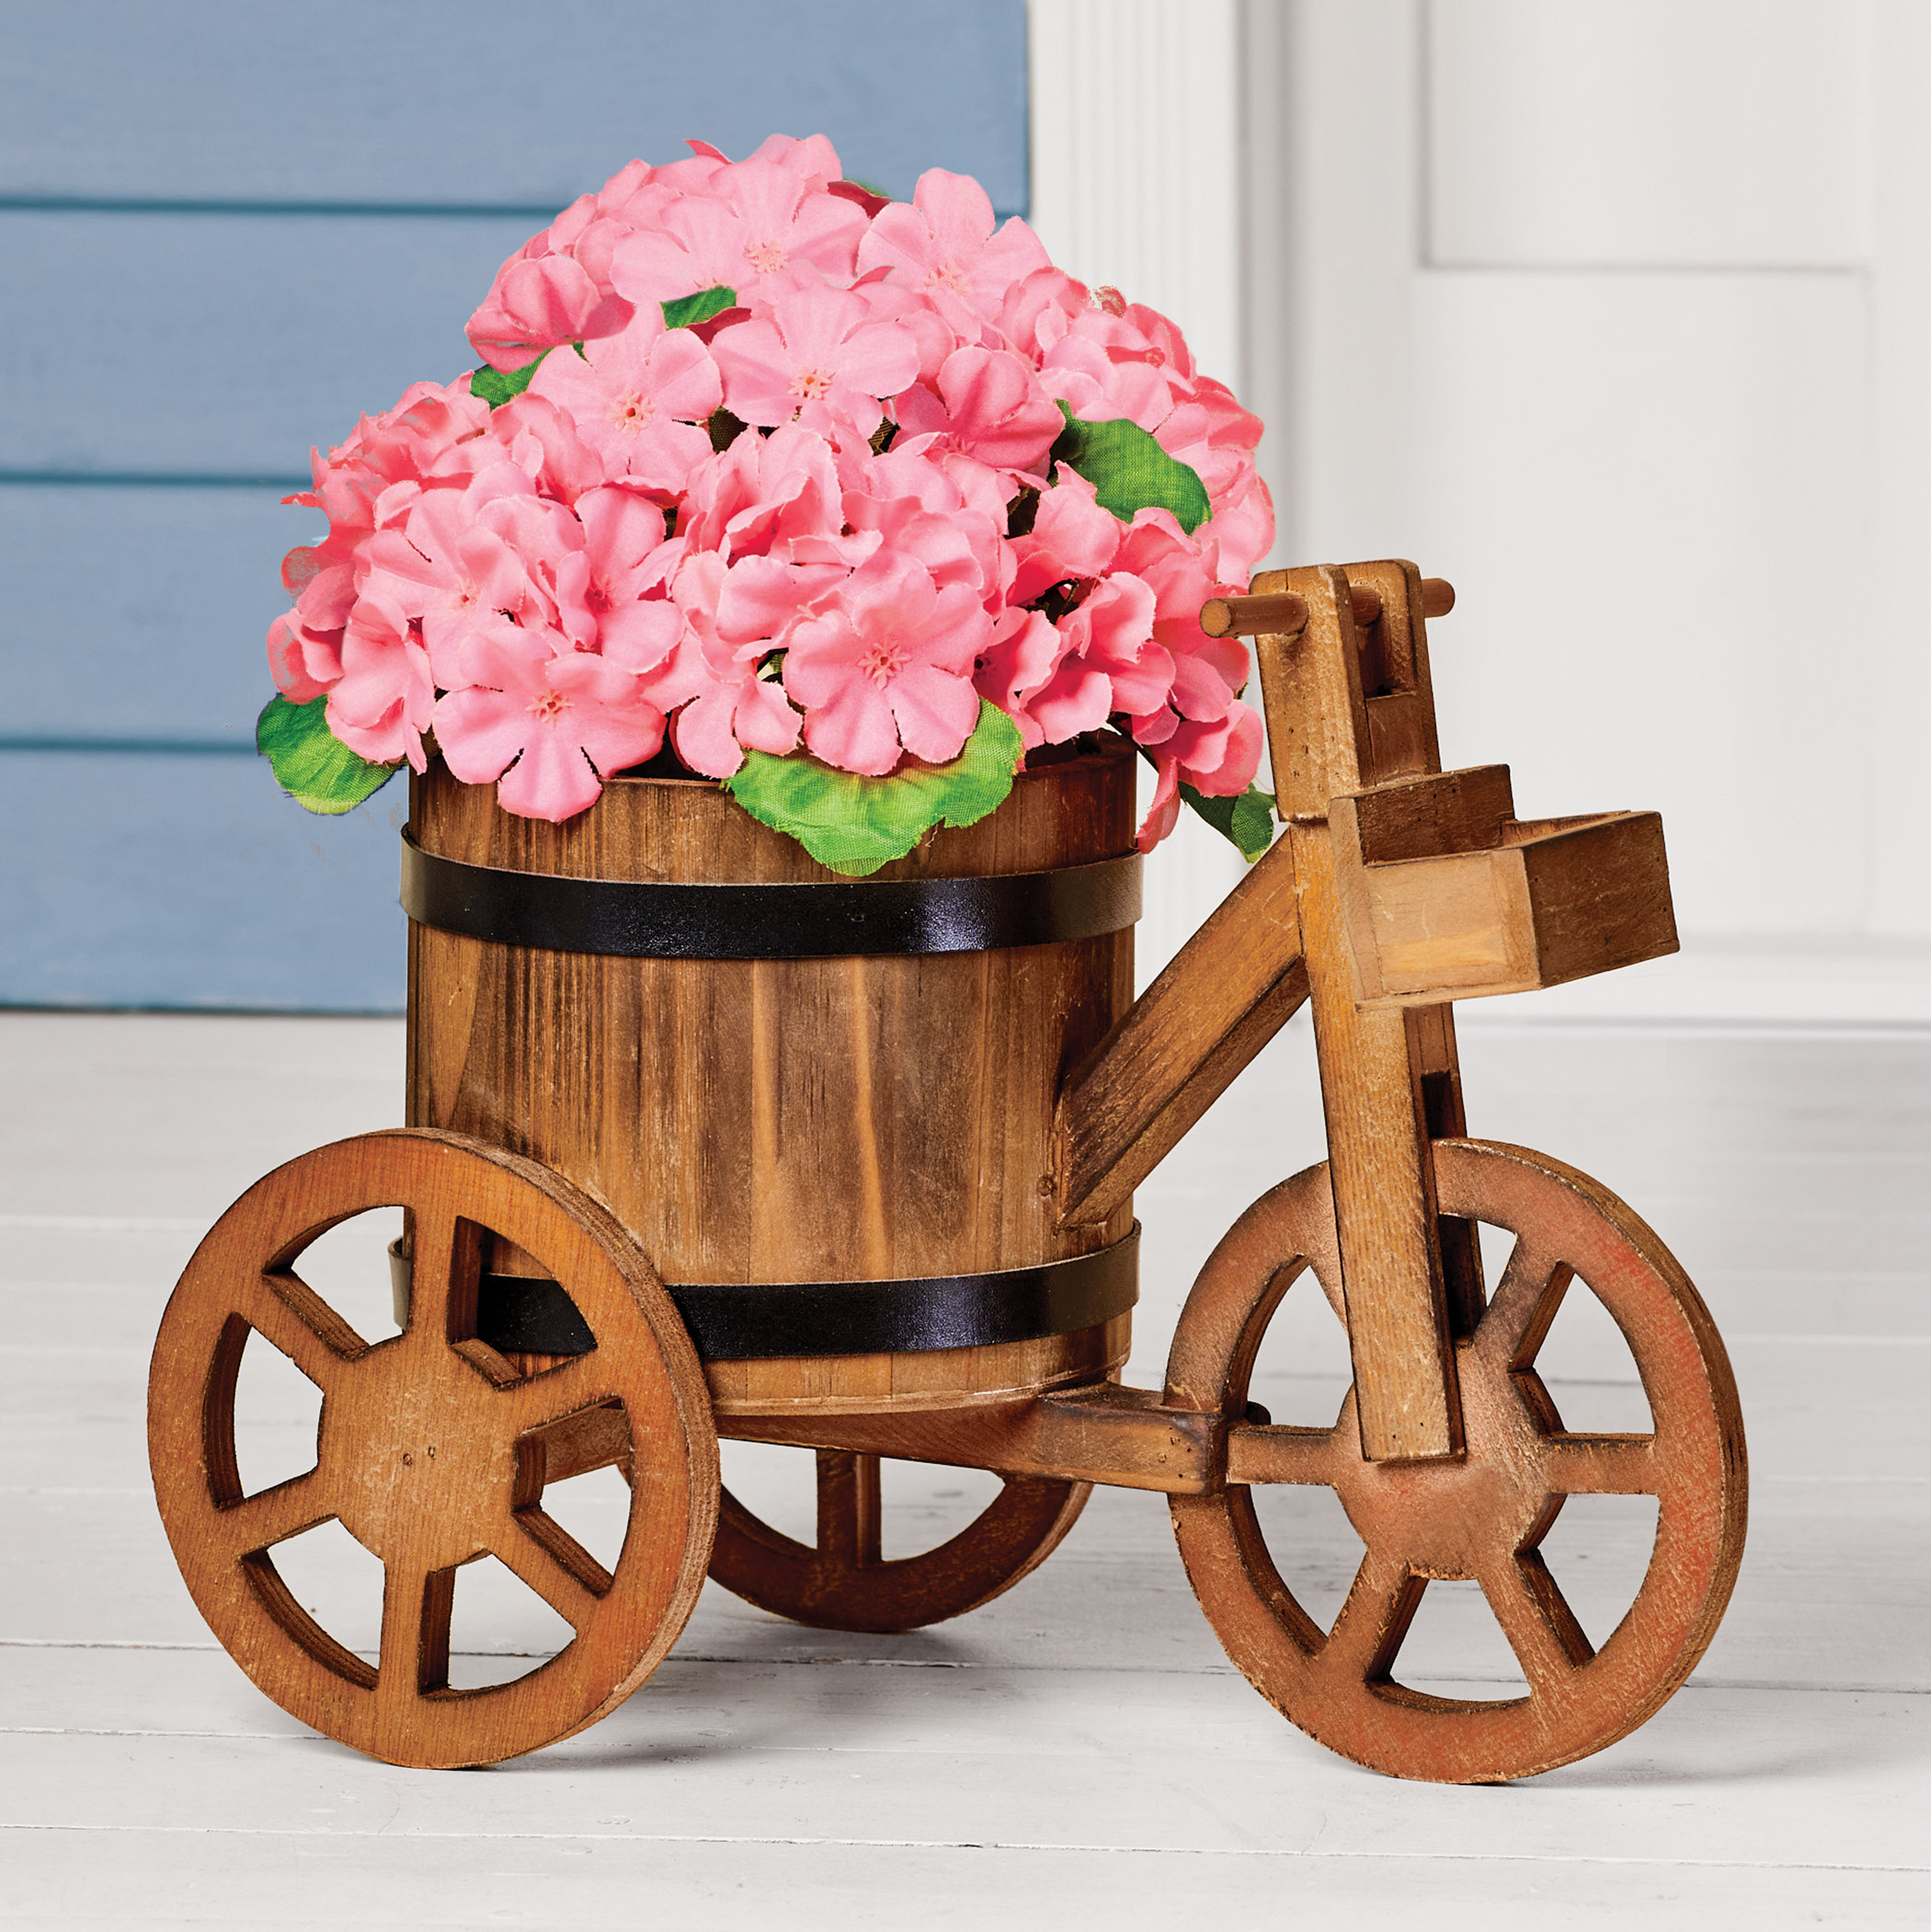 Vintage Rustic Bicycle Cart, Fish For Sale, Flower Arrangement